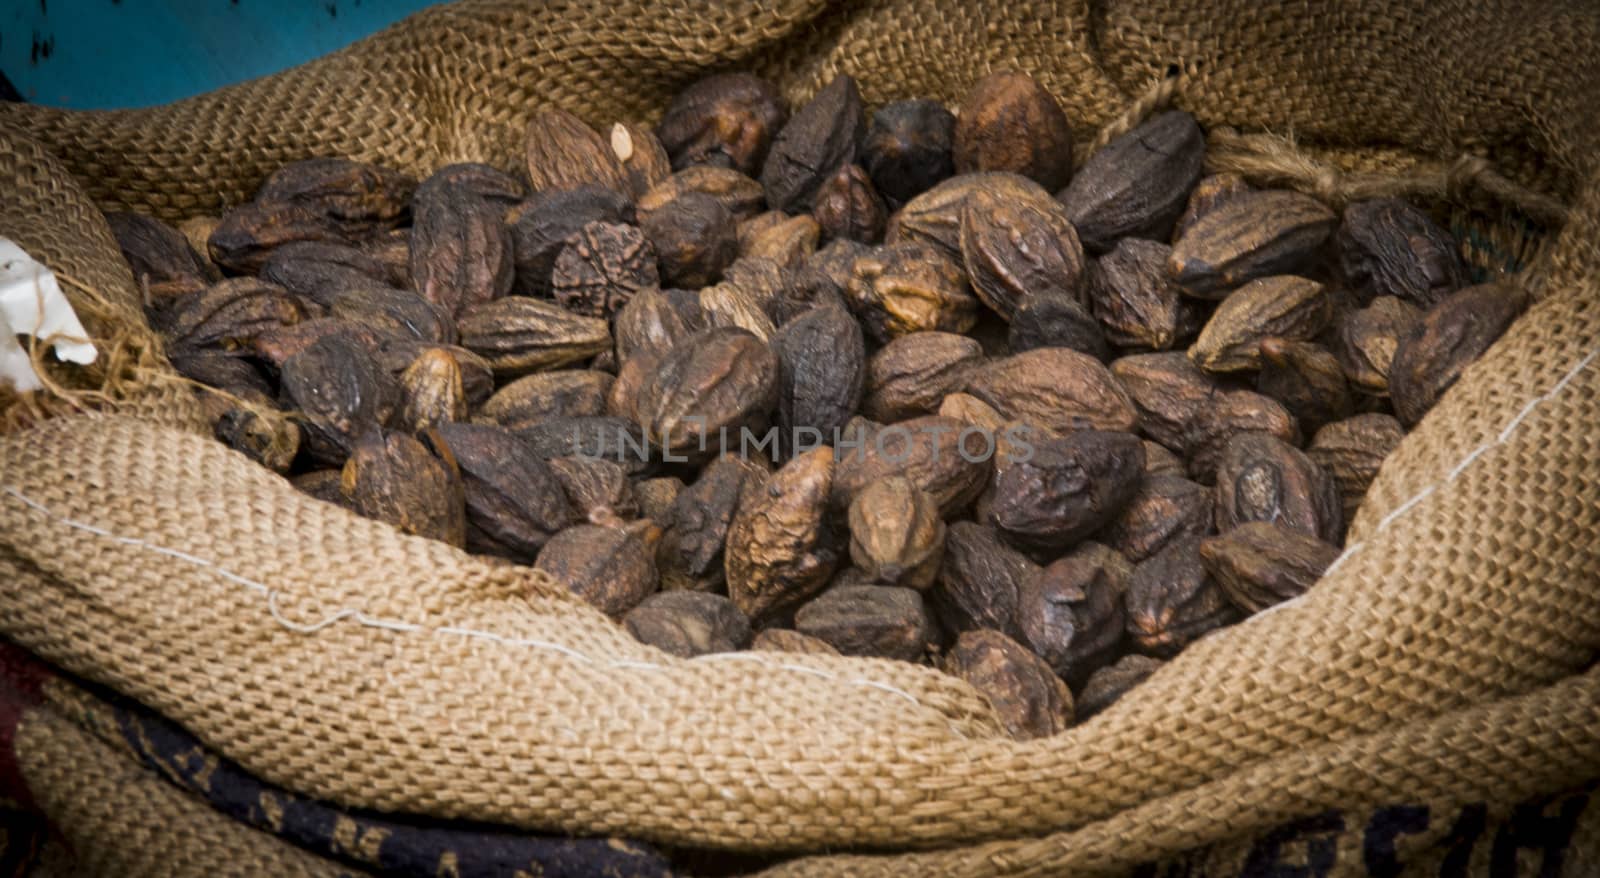 Cocoa in India